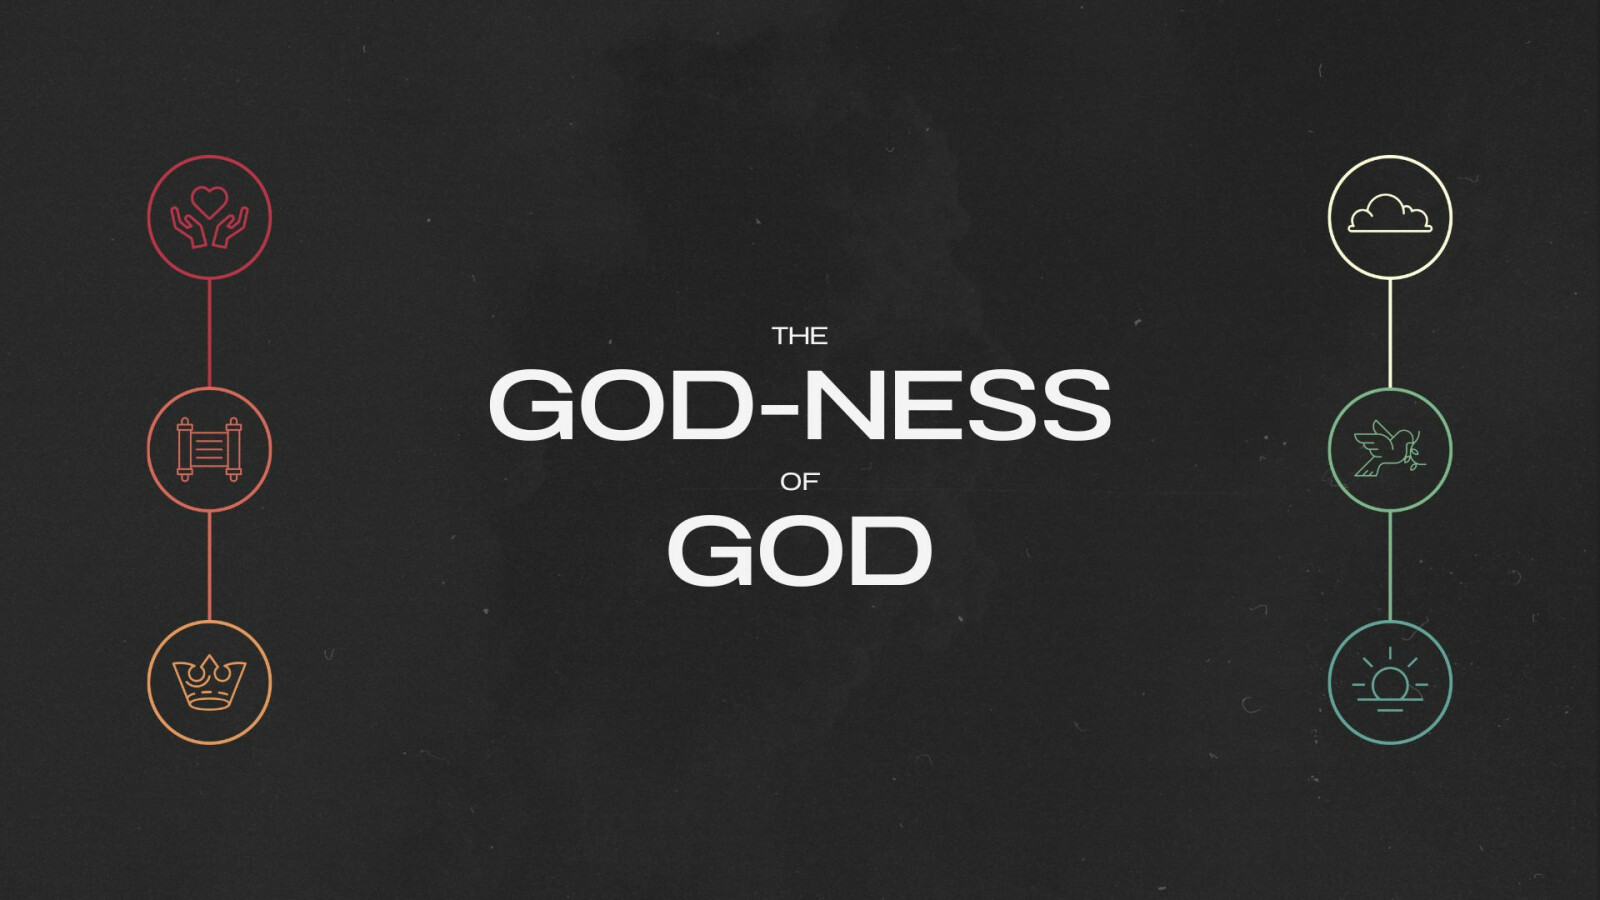 The God-ness of God